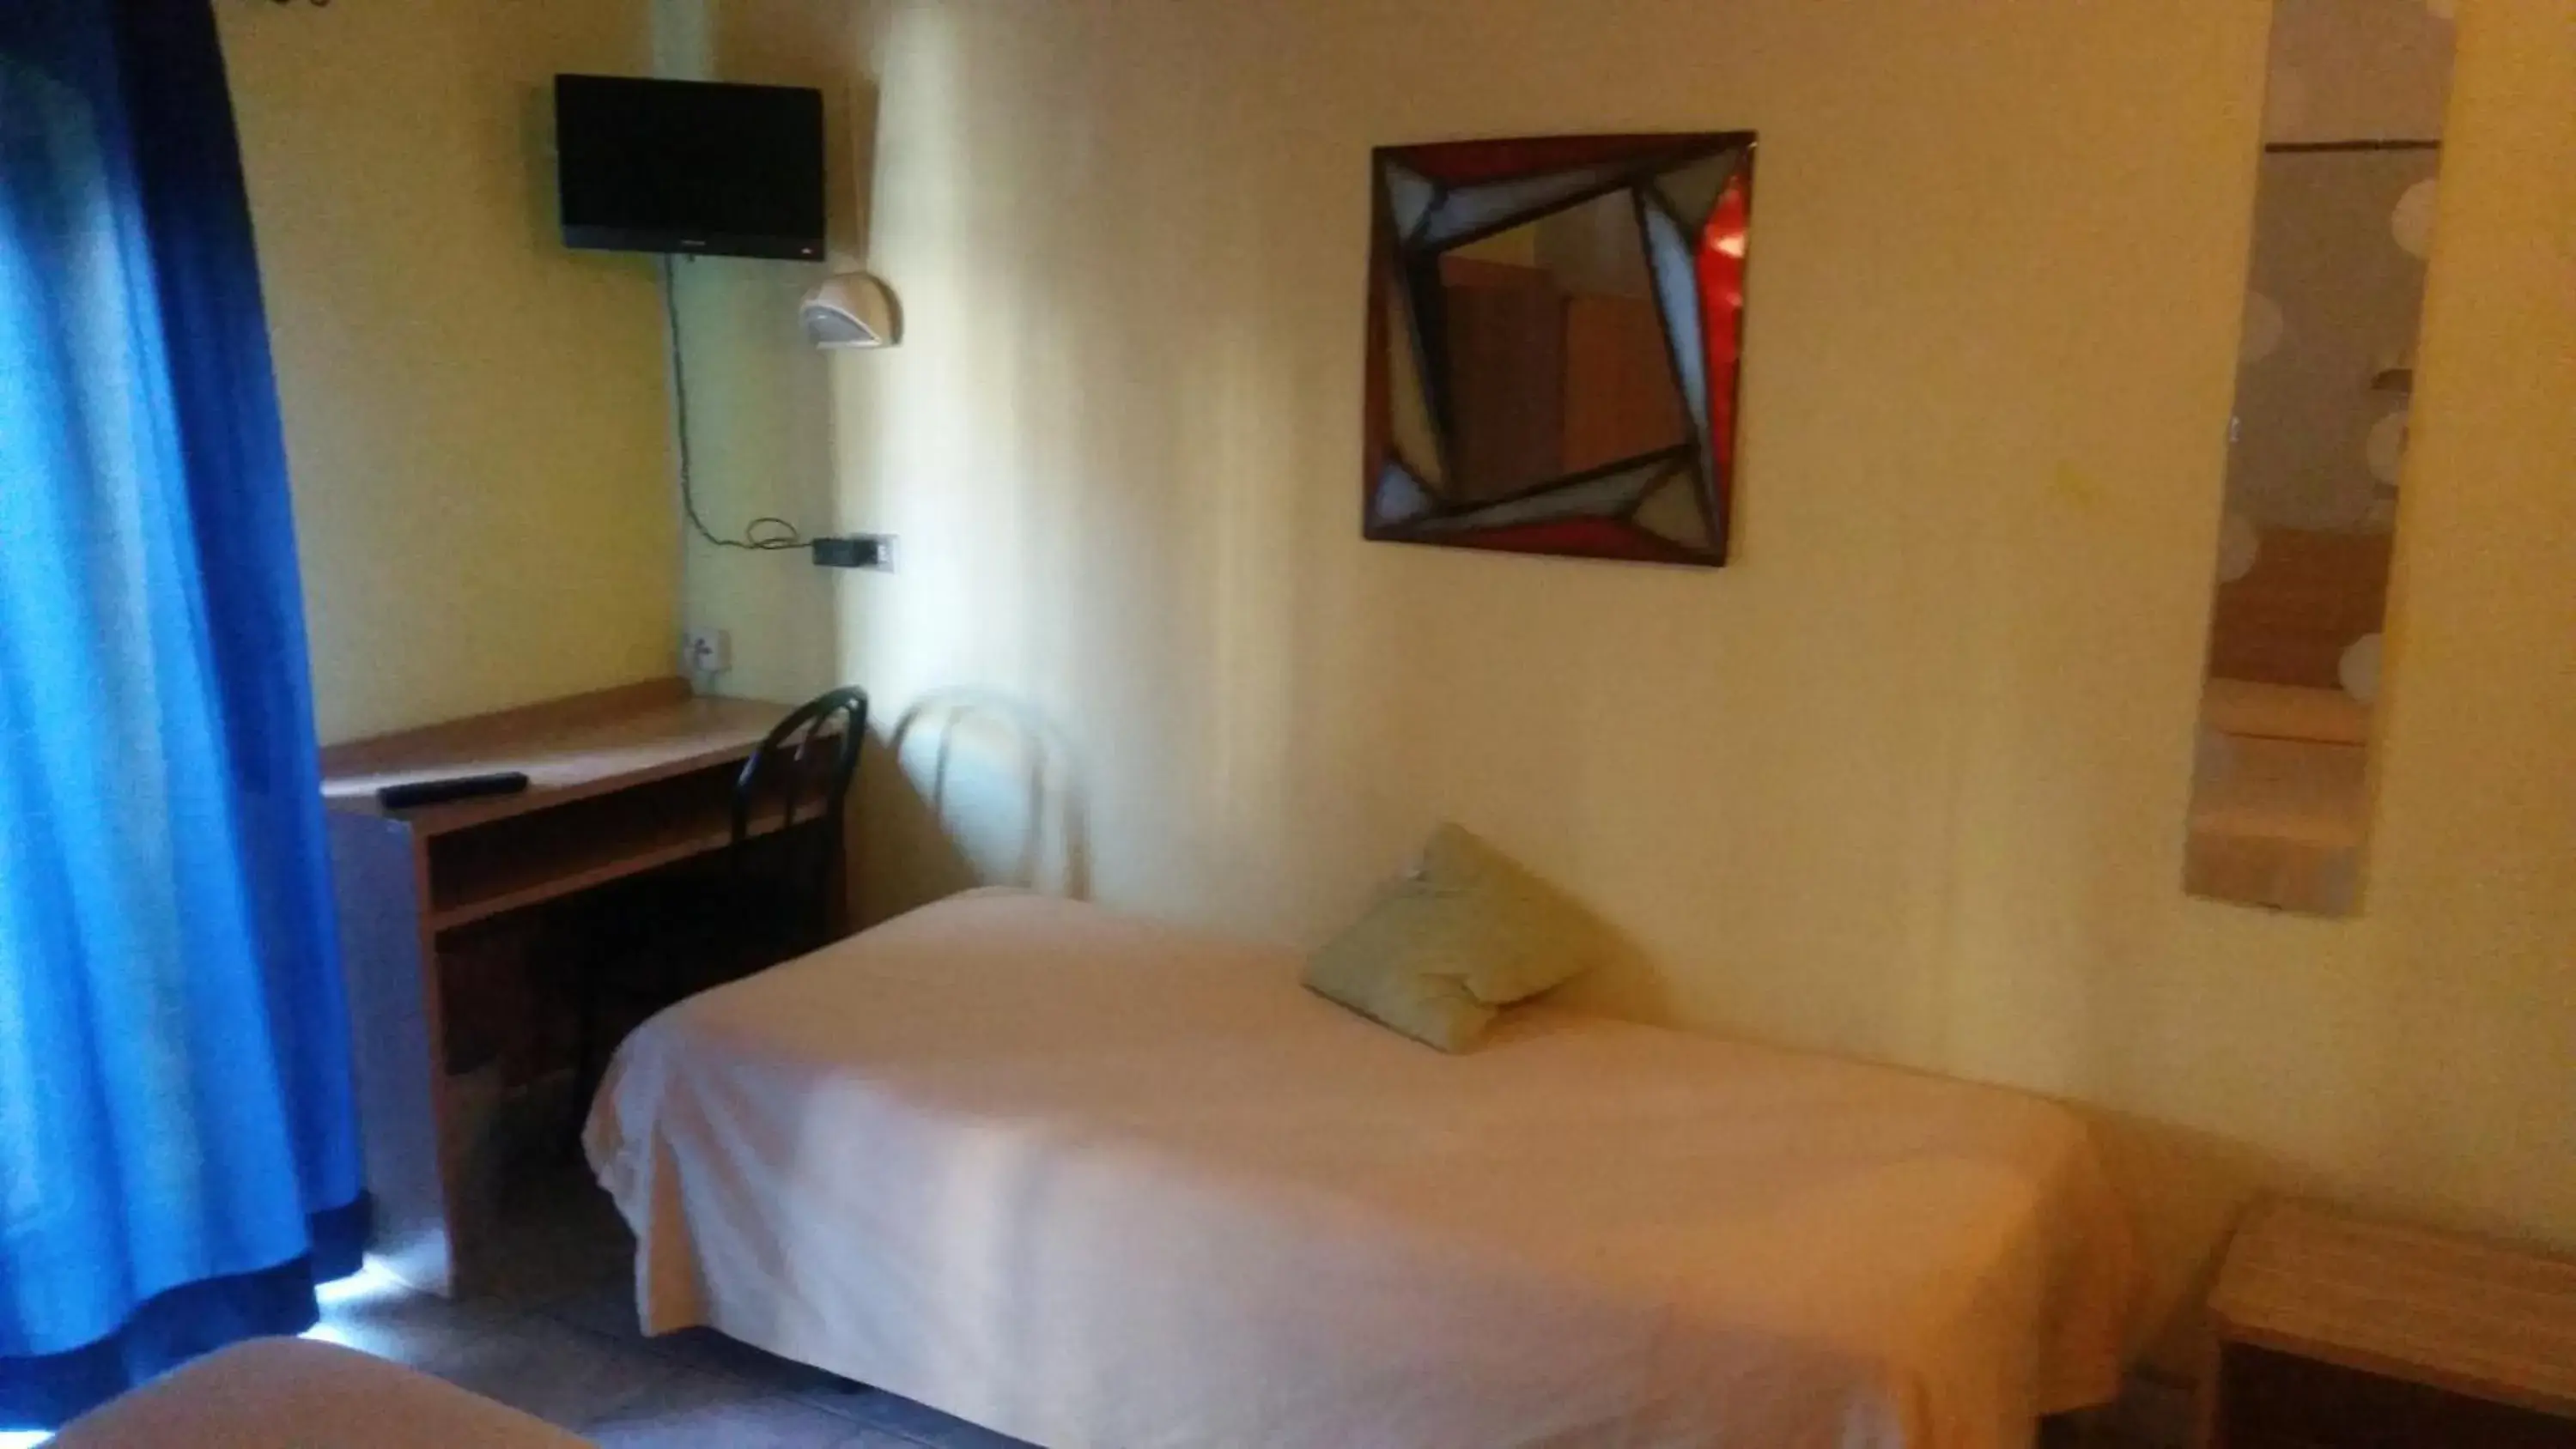 Bed, Room Photo in Hotel Stazione